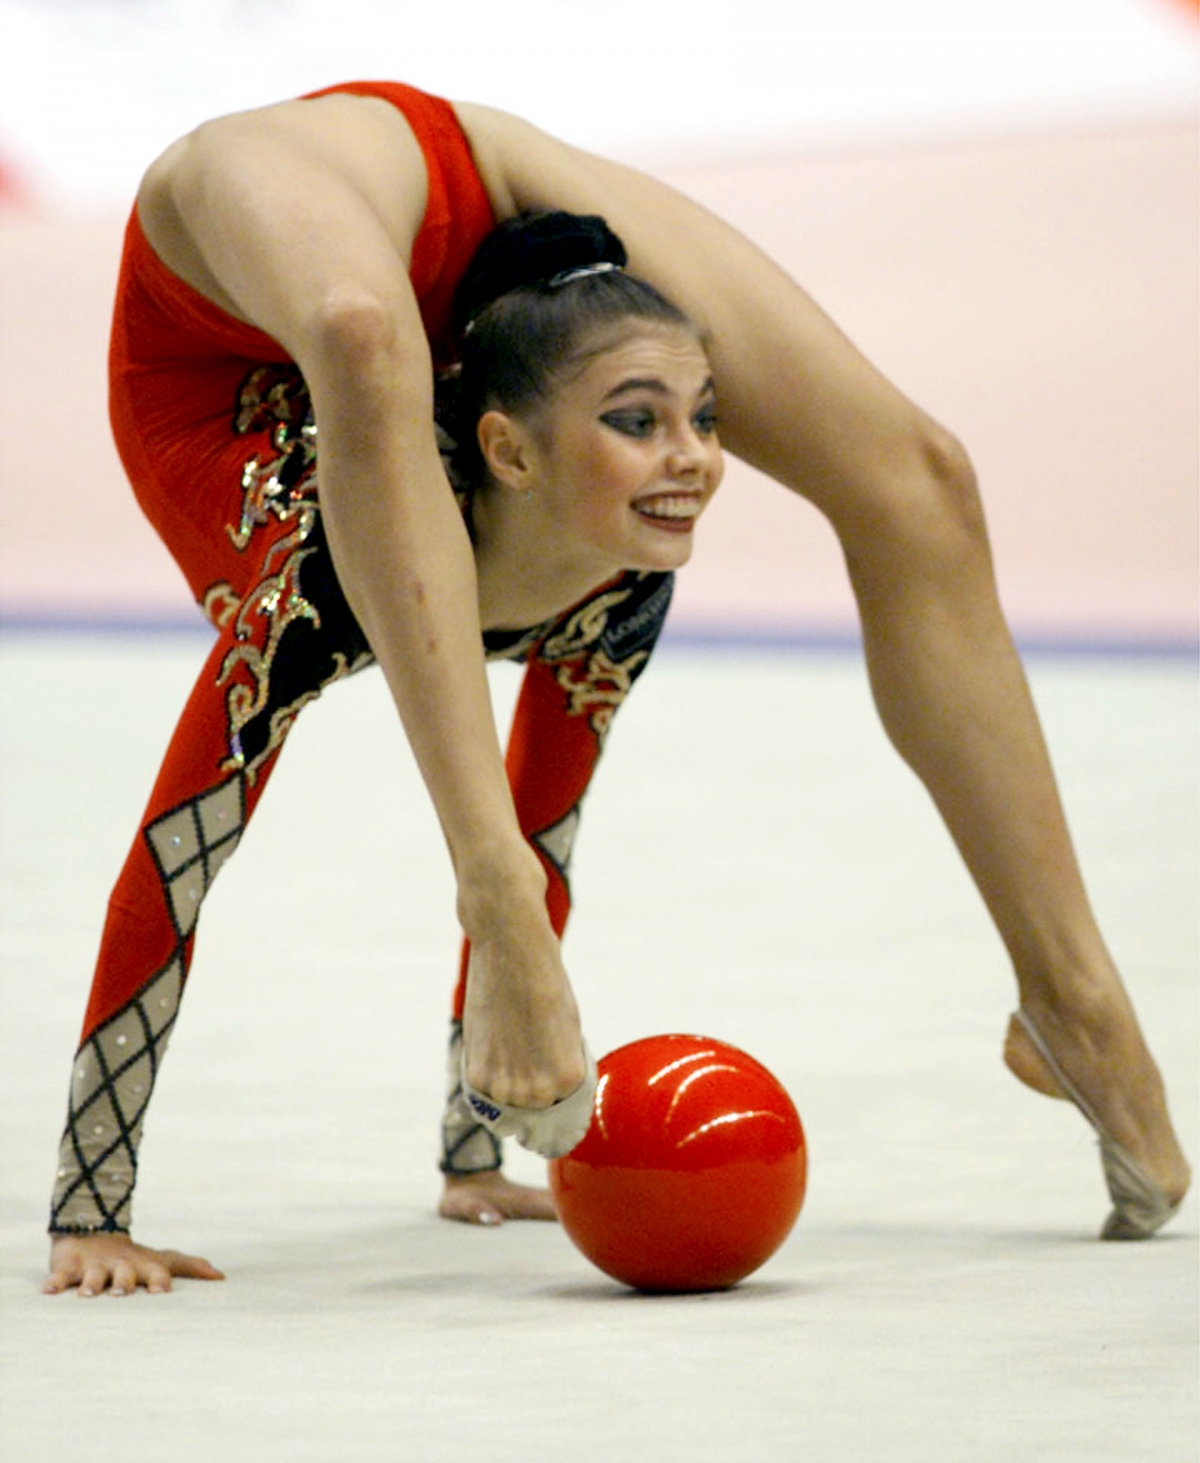 Will Putins Gymnast Lover Alina Kabayeva Light Sochi Olympic Flame